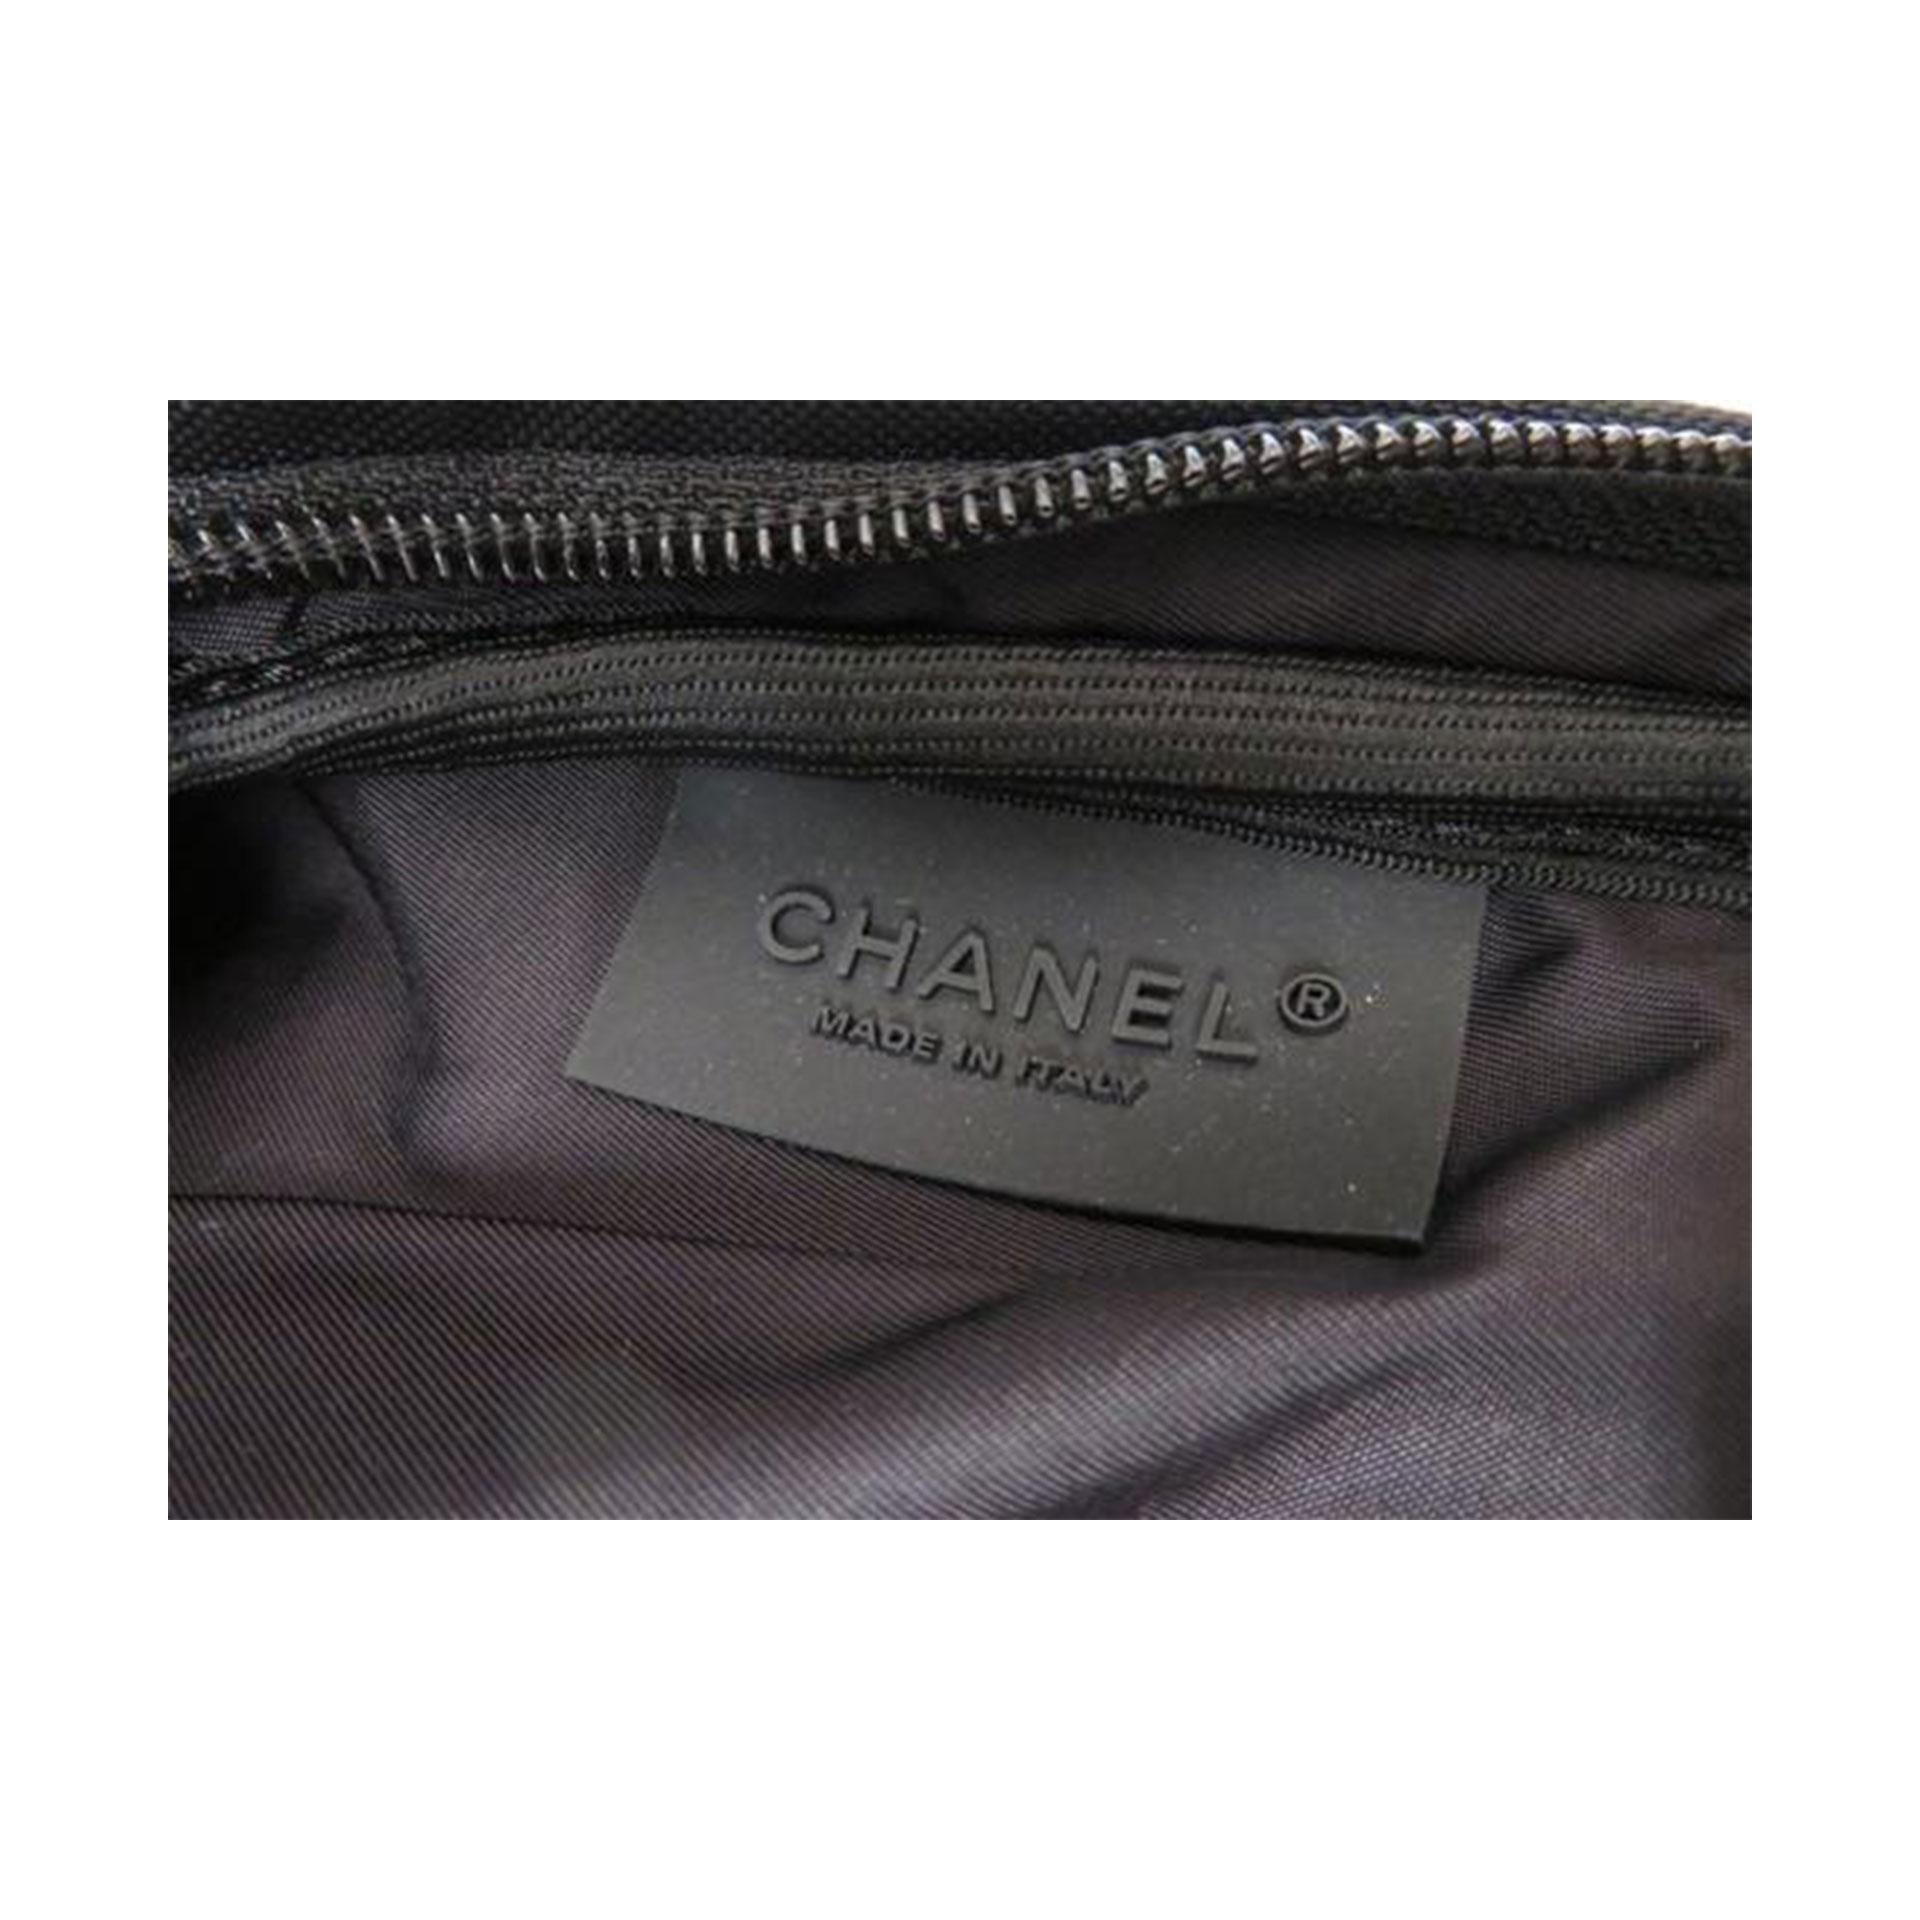 Chanel Canvas Tennis Racquet Cover White Nylon Sport Bag For Sale 2